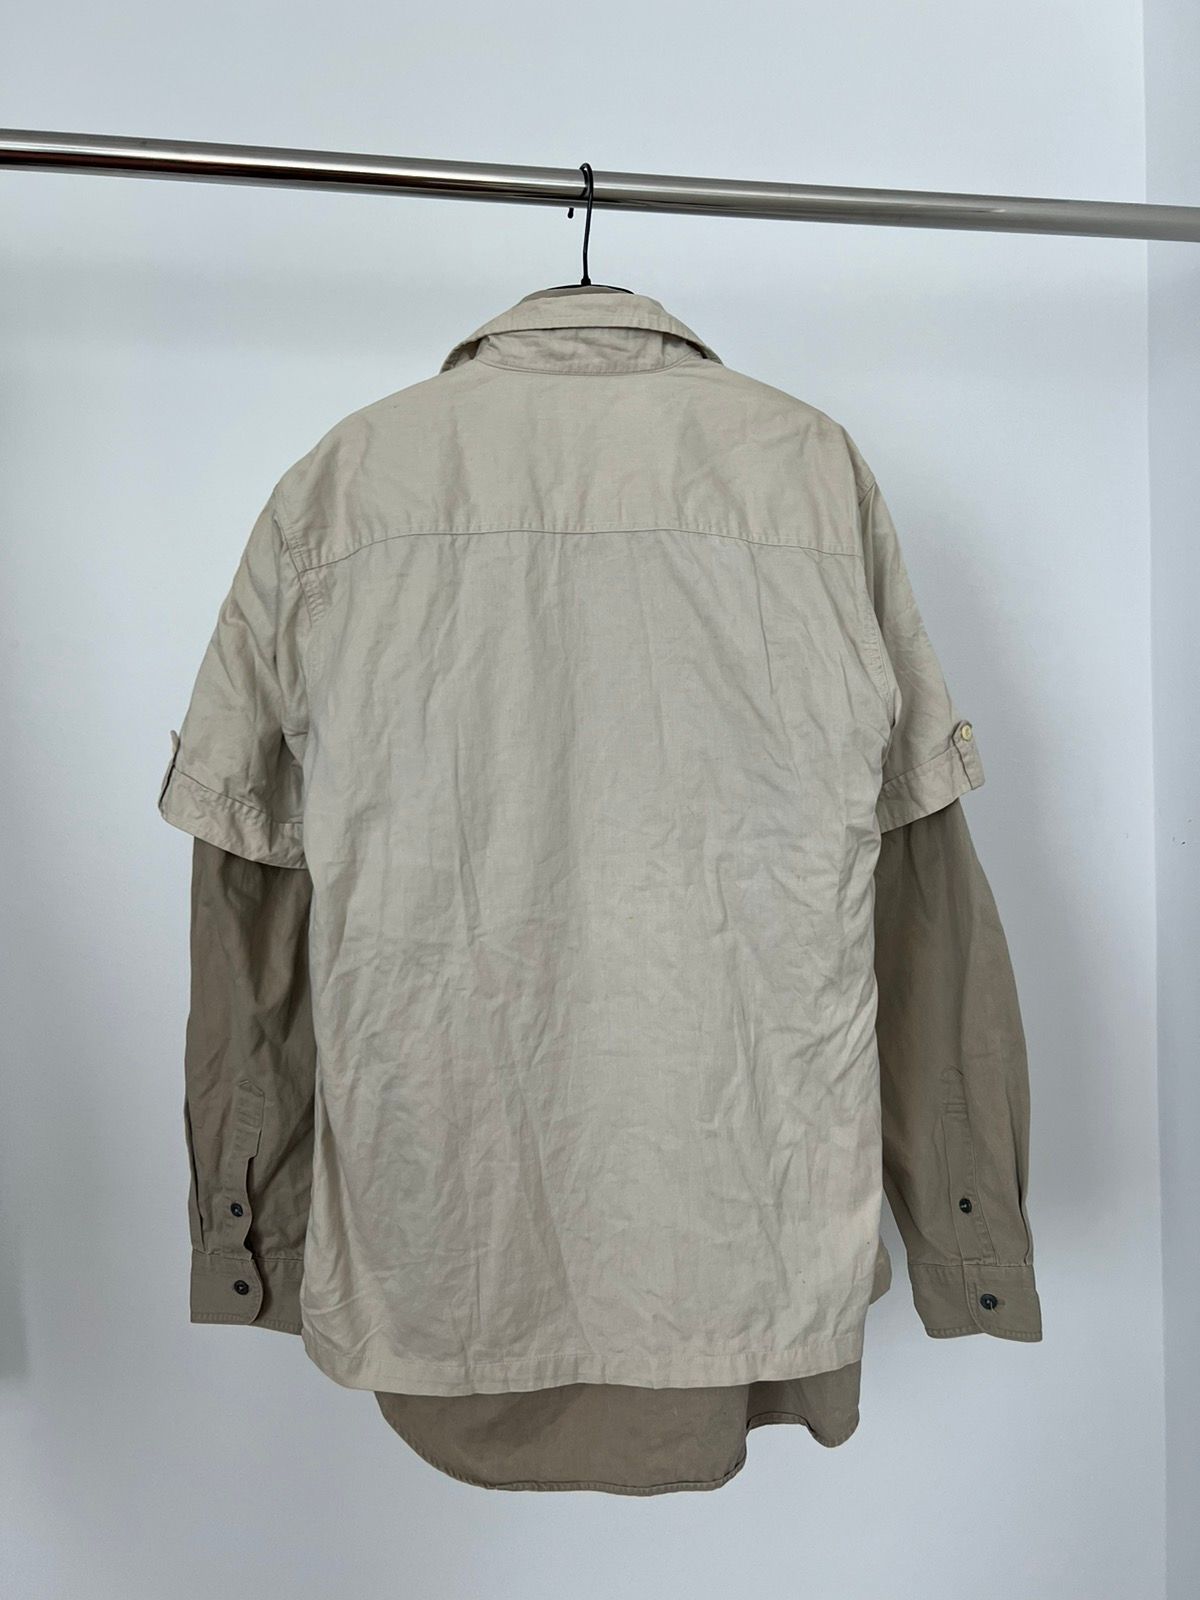 Yohji Yamamoto Yohji Yamamoto - AAR - Hybrid Double Layer Shirt Military Size US L / EU 52-54 / 3 - 10 Preview